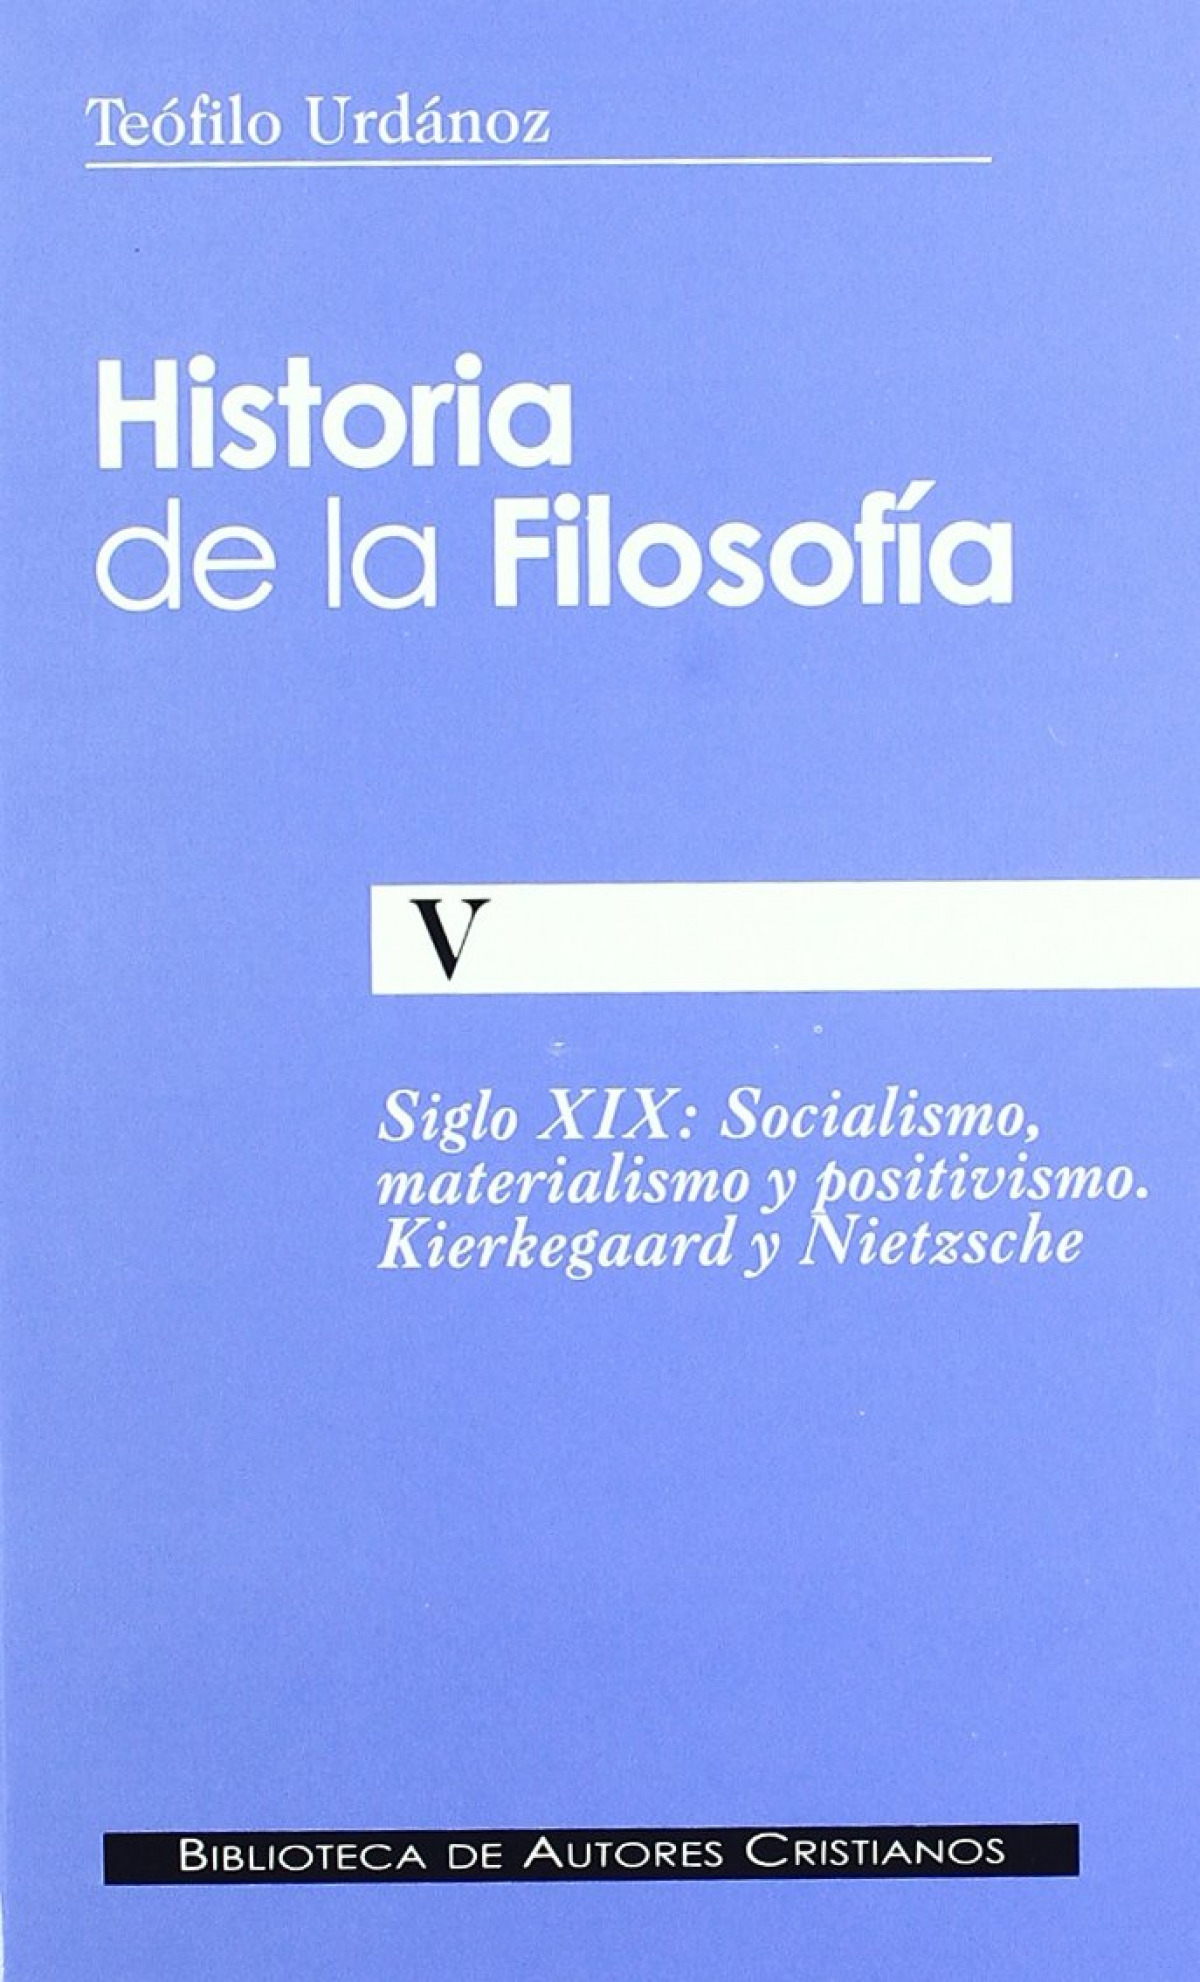 Historia de la filosofia v siglo xix socialismo materialismo y positiv - Urdanoz, Teofilo